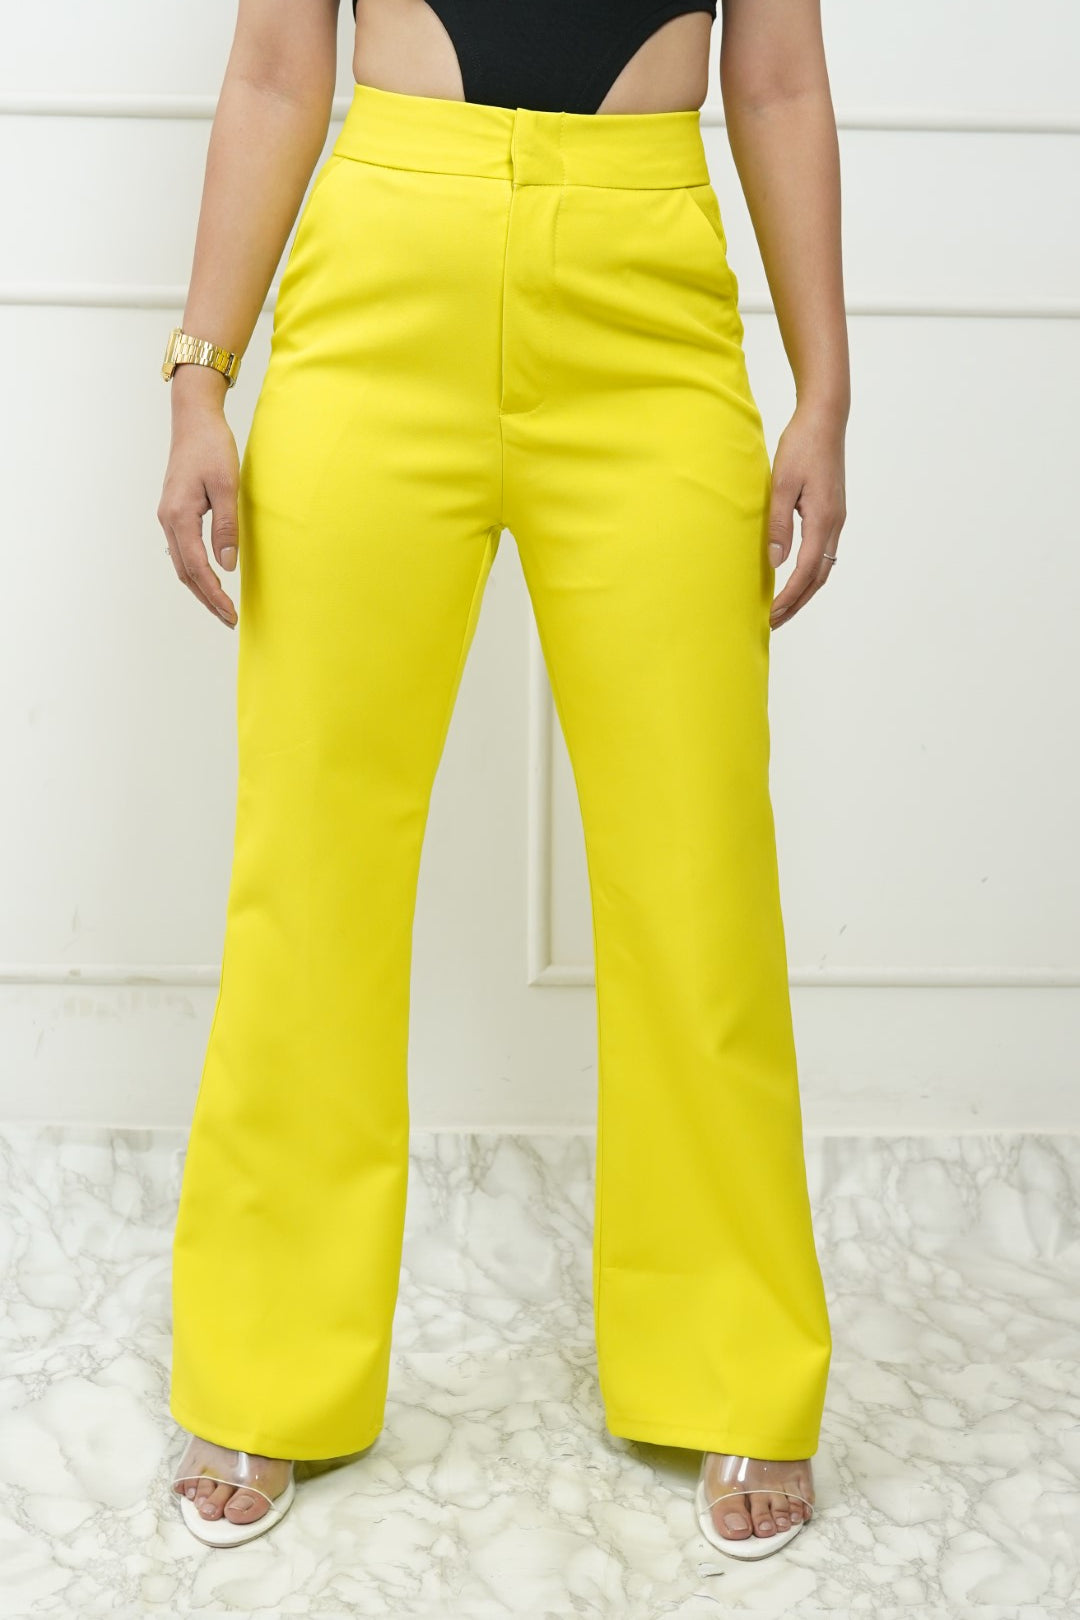 Neon Yellow Flare Pants